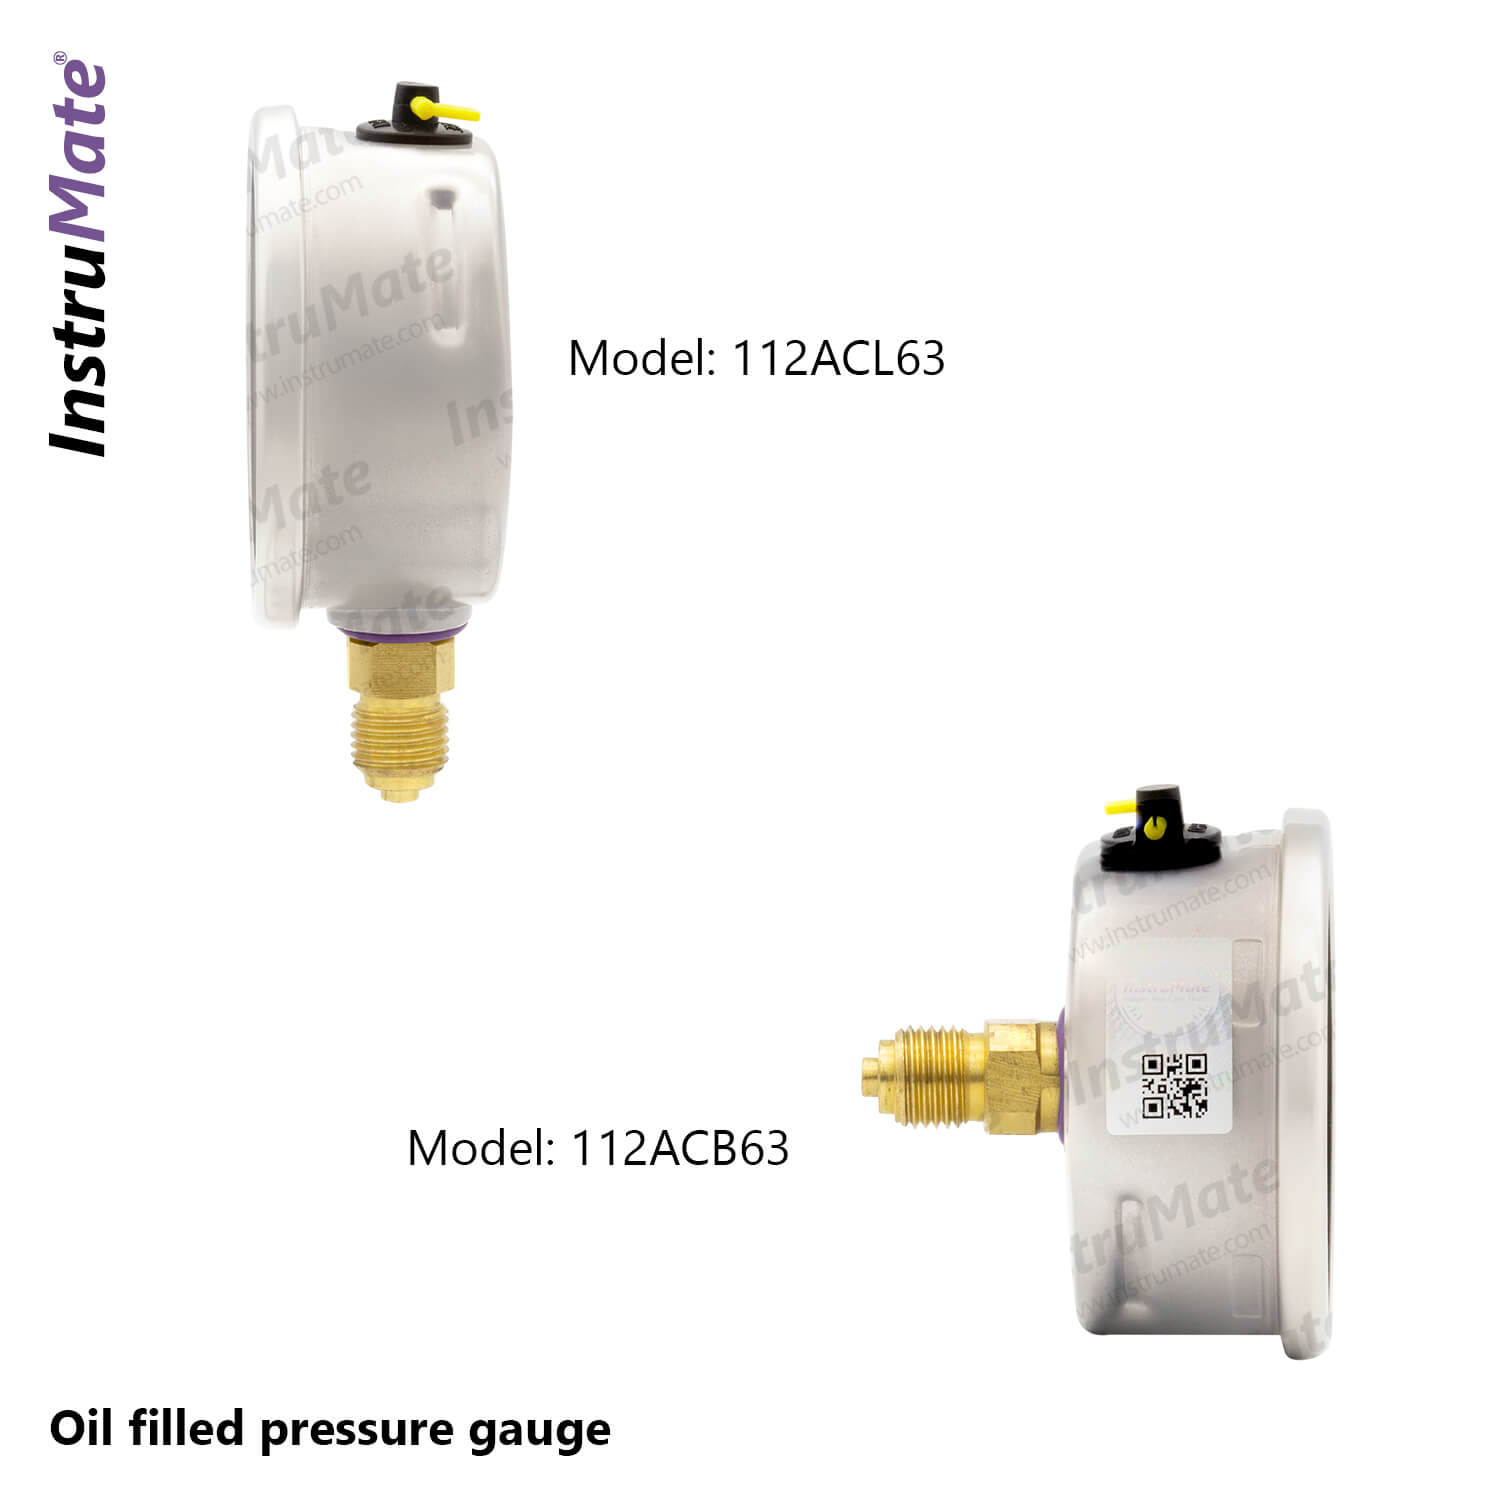 Oil Filled Pressure Gauge - 112AC - InstruMate